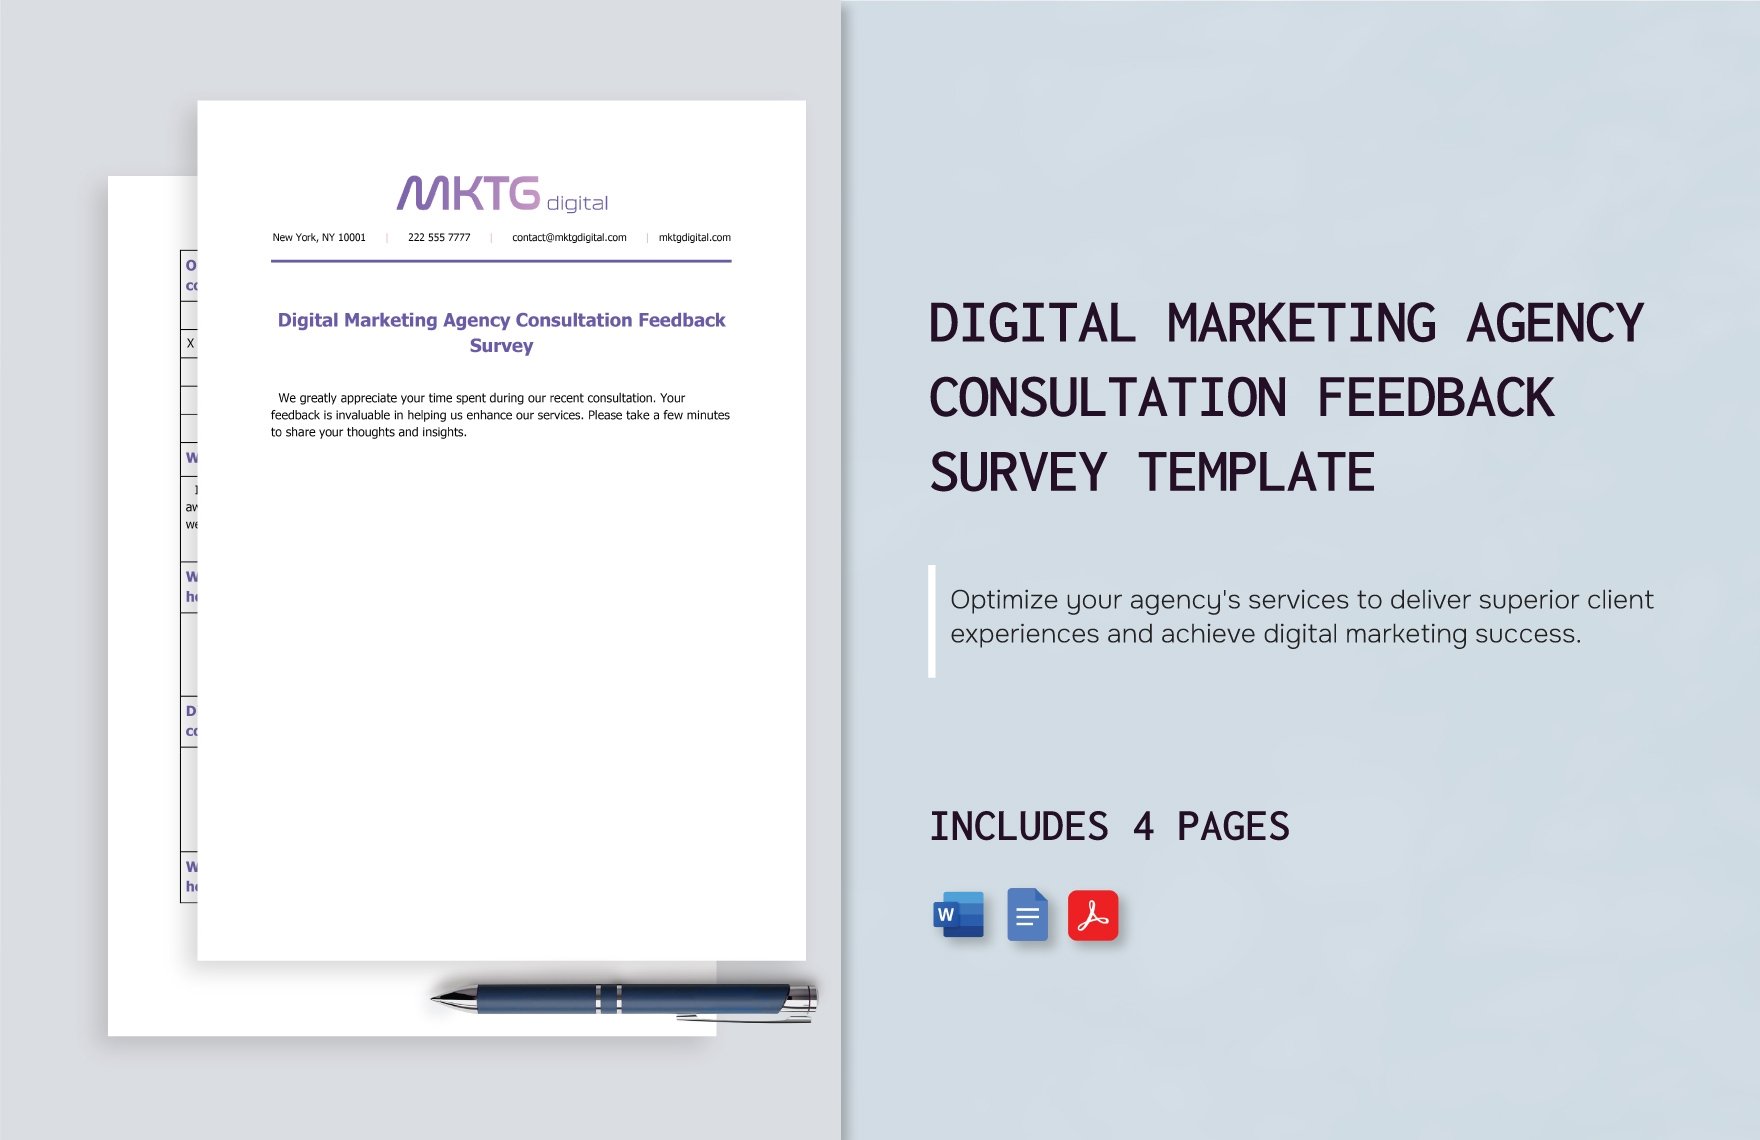 Digital Marketing Agency Consultation Feedback Survey Template